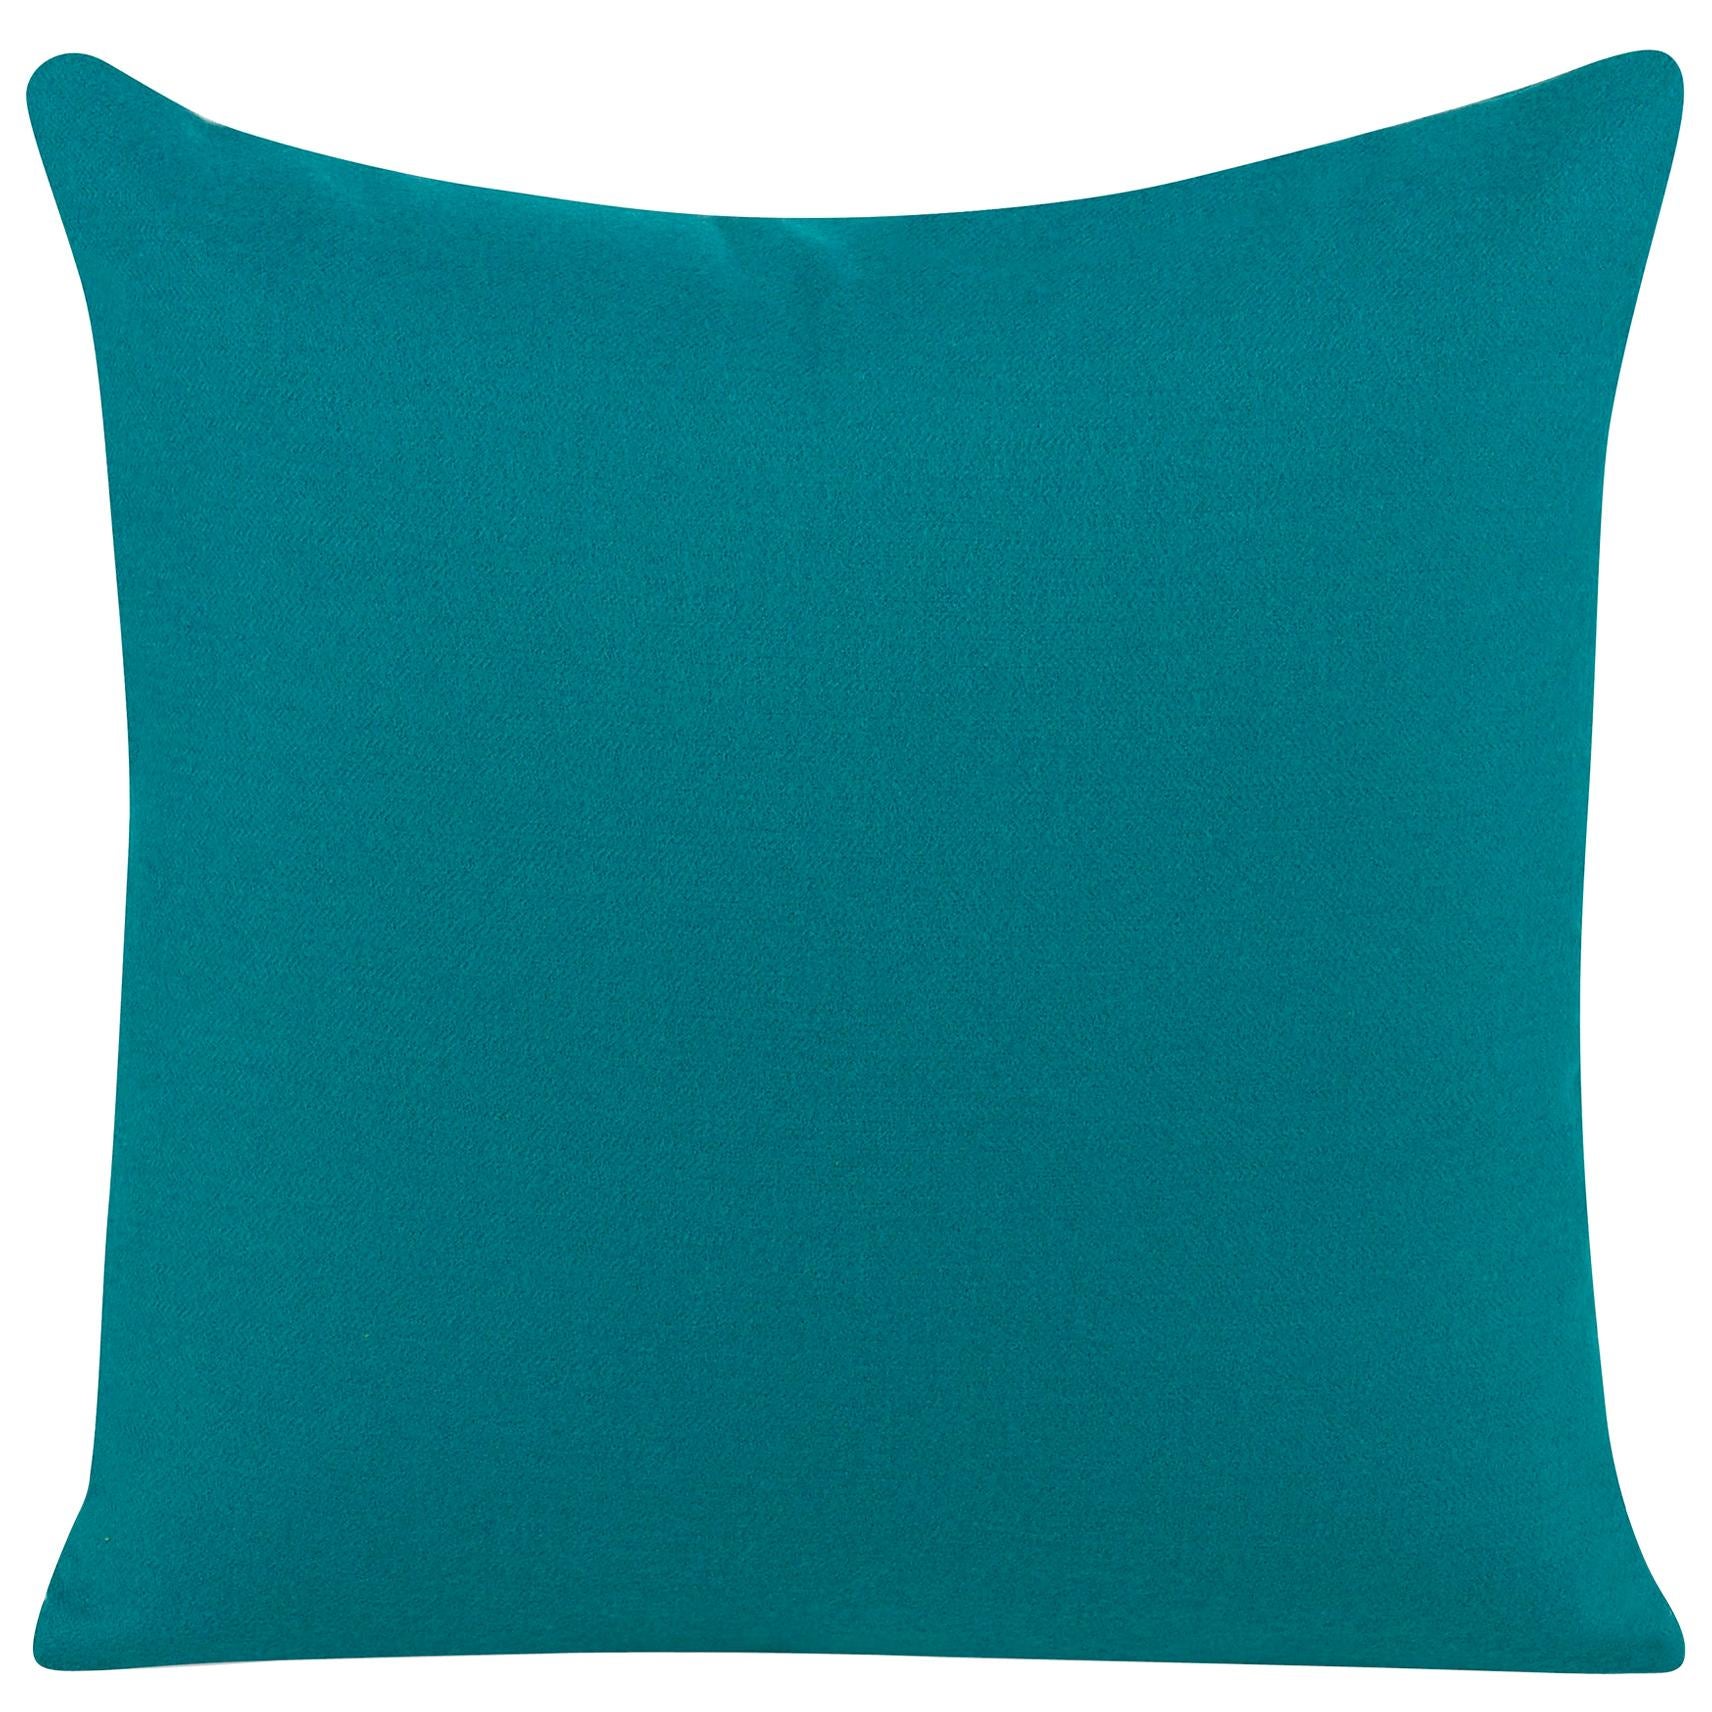 Bleeker Pillow in Blue by Curatedkravet